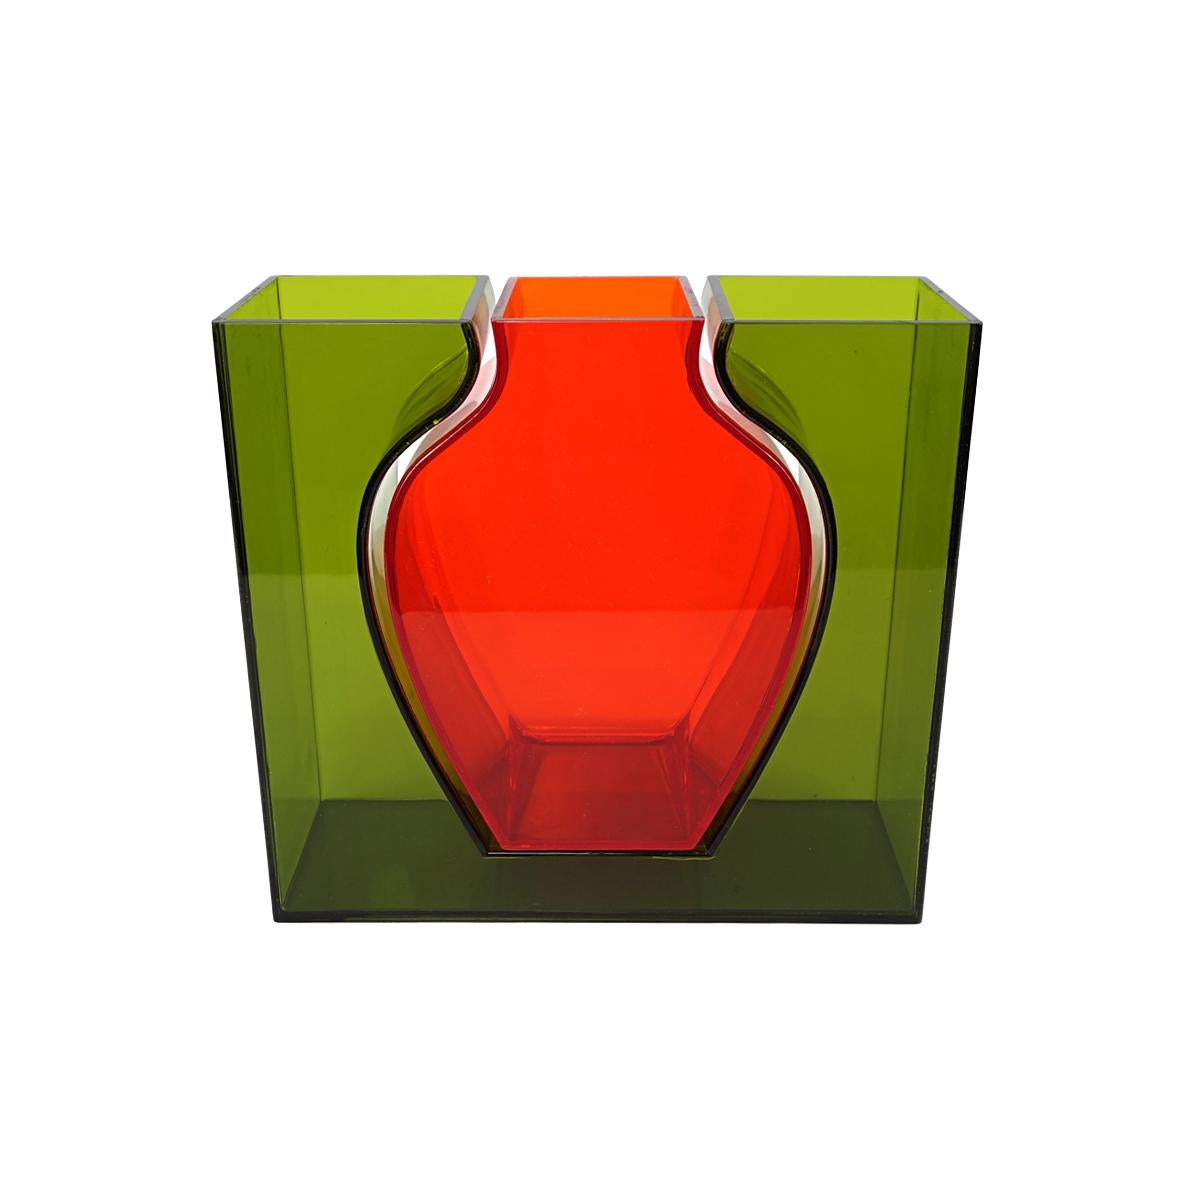 Modern 1990s Dutch Design Plexiglass Red Vase Within a Green Vase For Sale